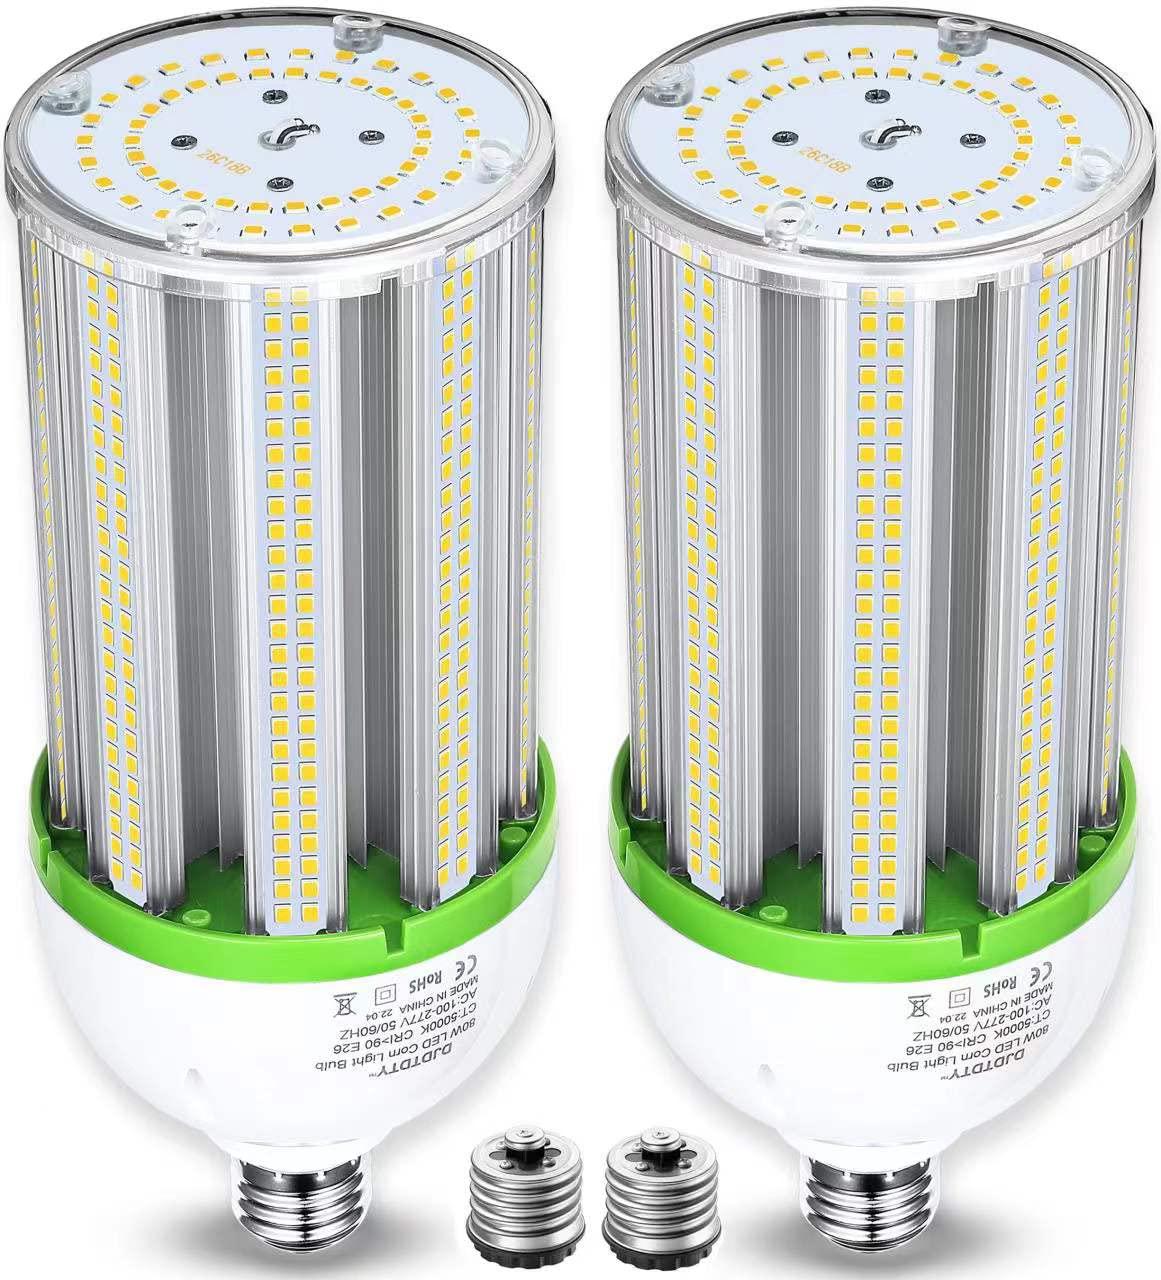 djdtdty 2 pack led bulbs, 150w/120w/100w/80w led corn bulb, e26 base with e39 adapter, 21006lm led light bulb for garage ware